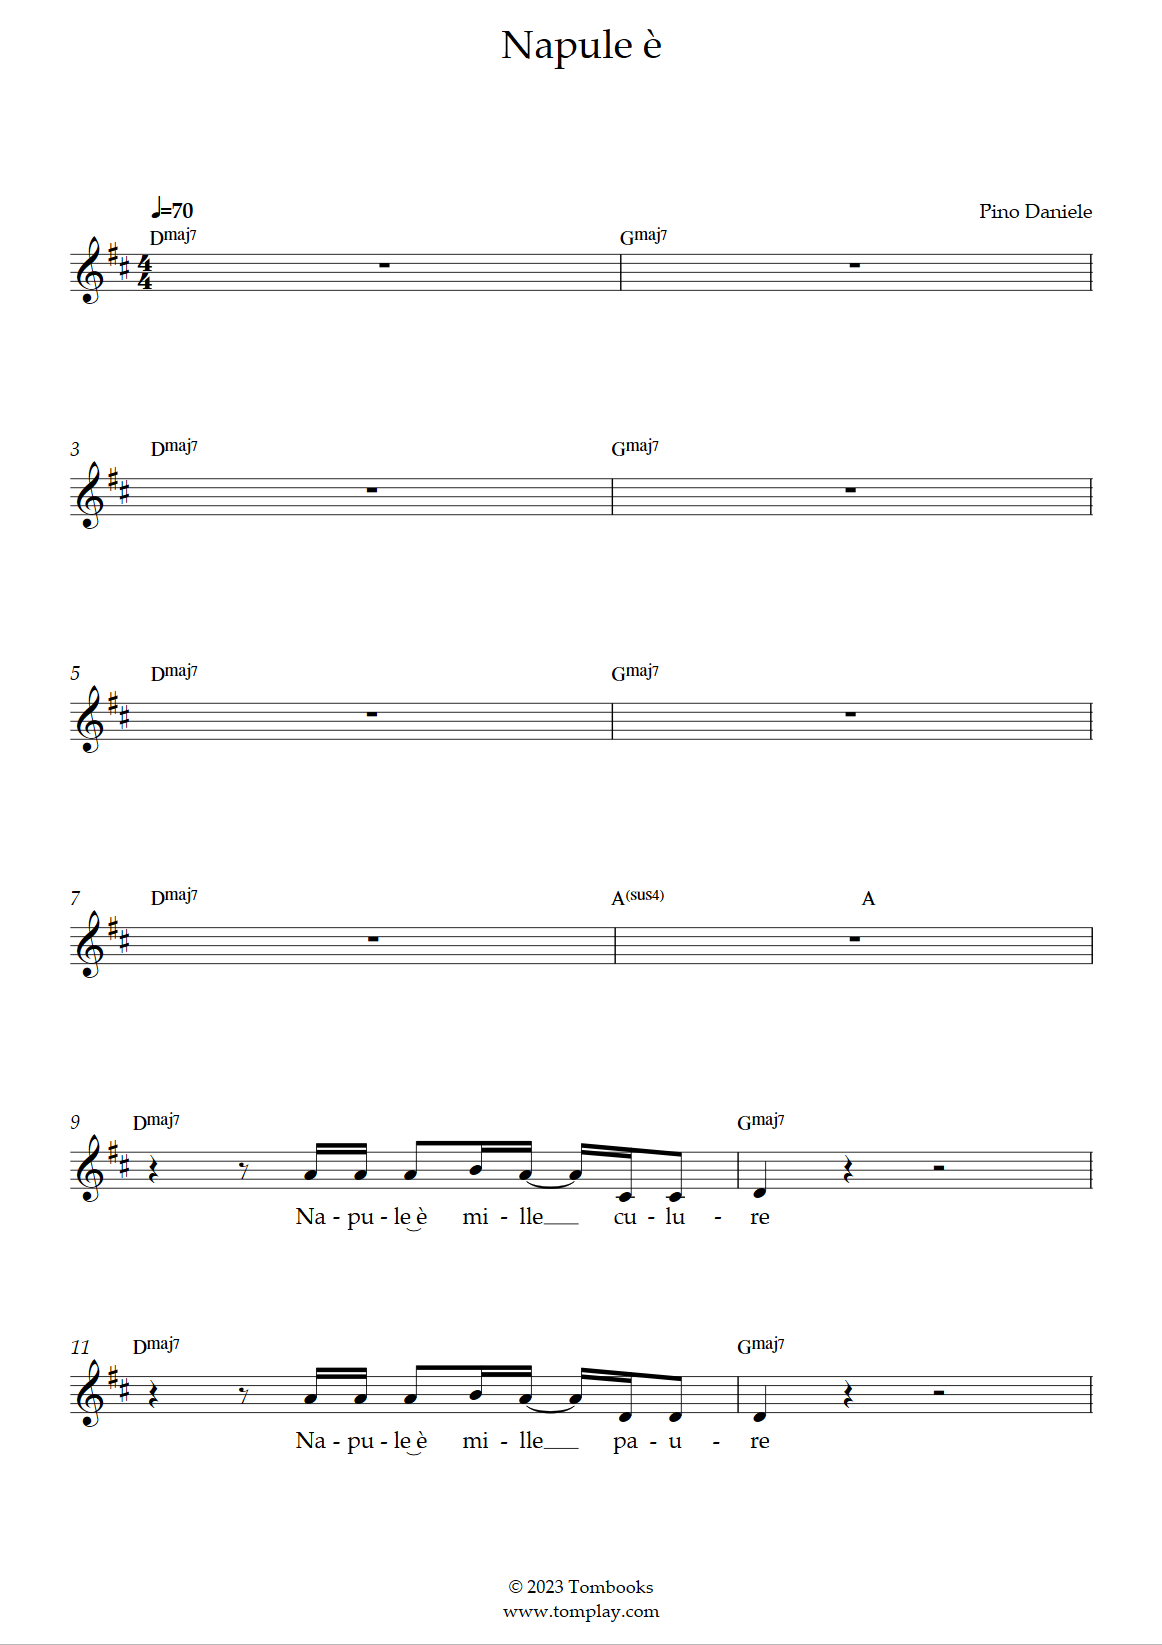 Pino Daniele Sheet Music to download and print